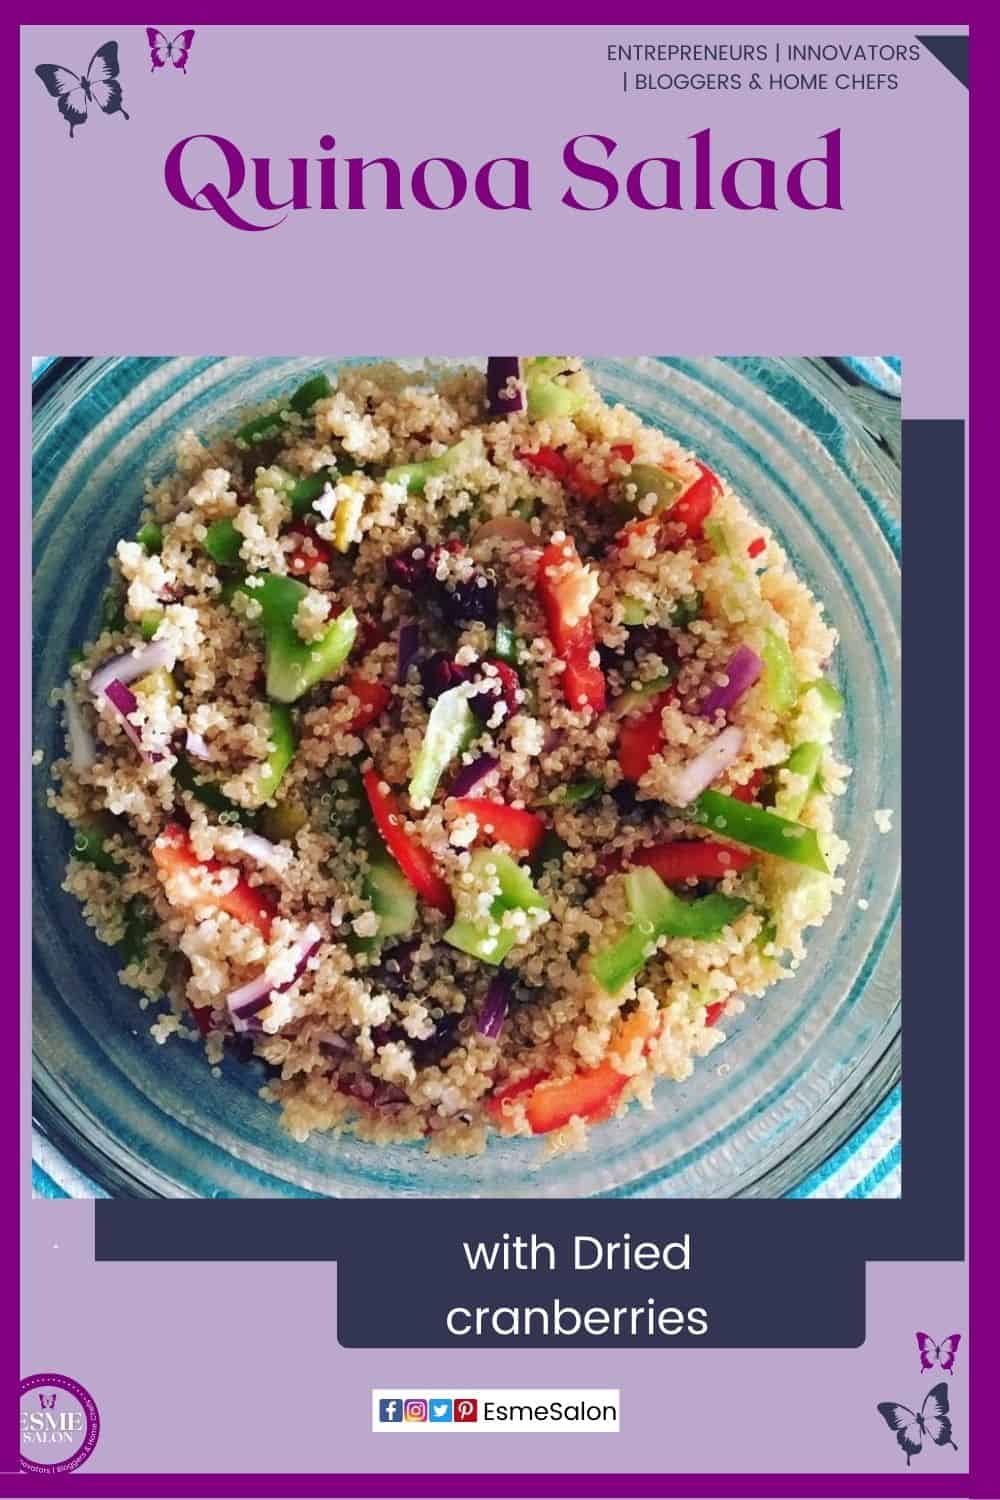 an image of a bowl of Quinoa Salad